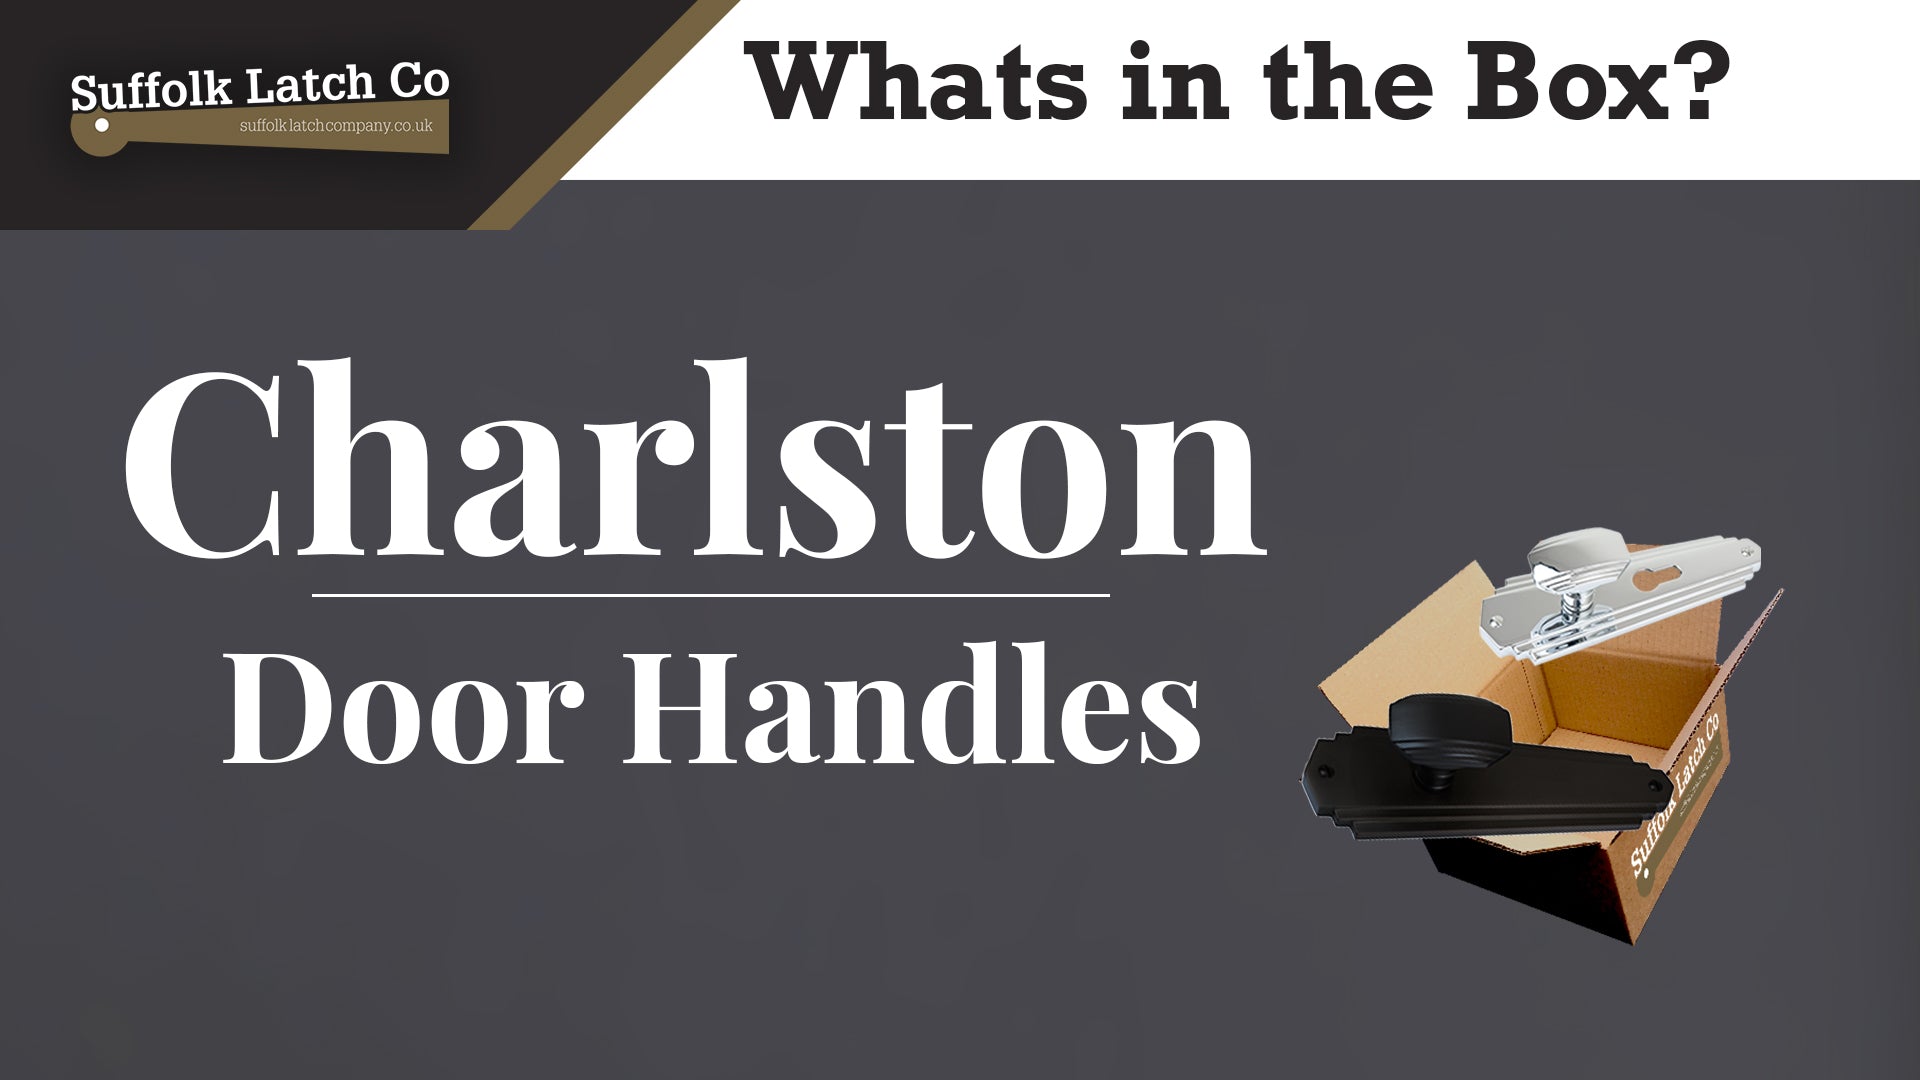 What's in the box: Charlston Door Handles